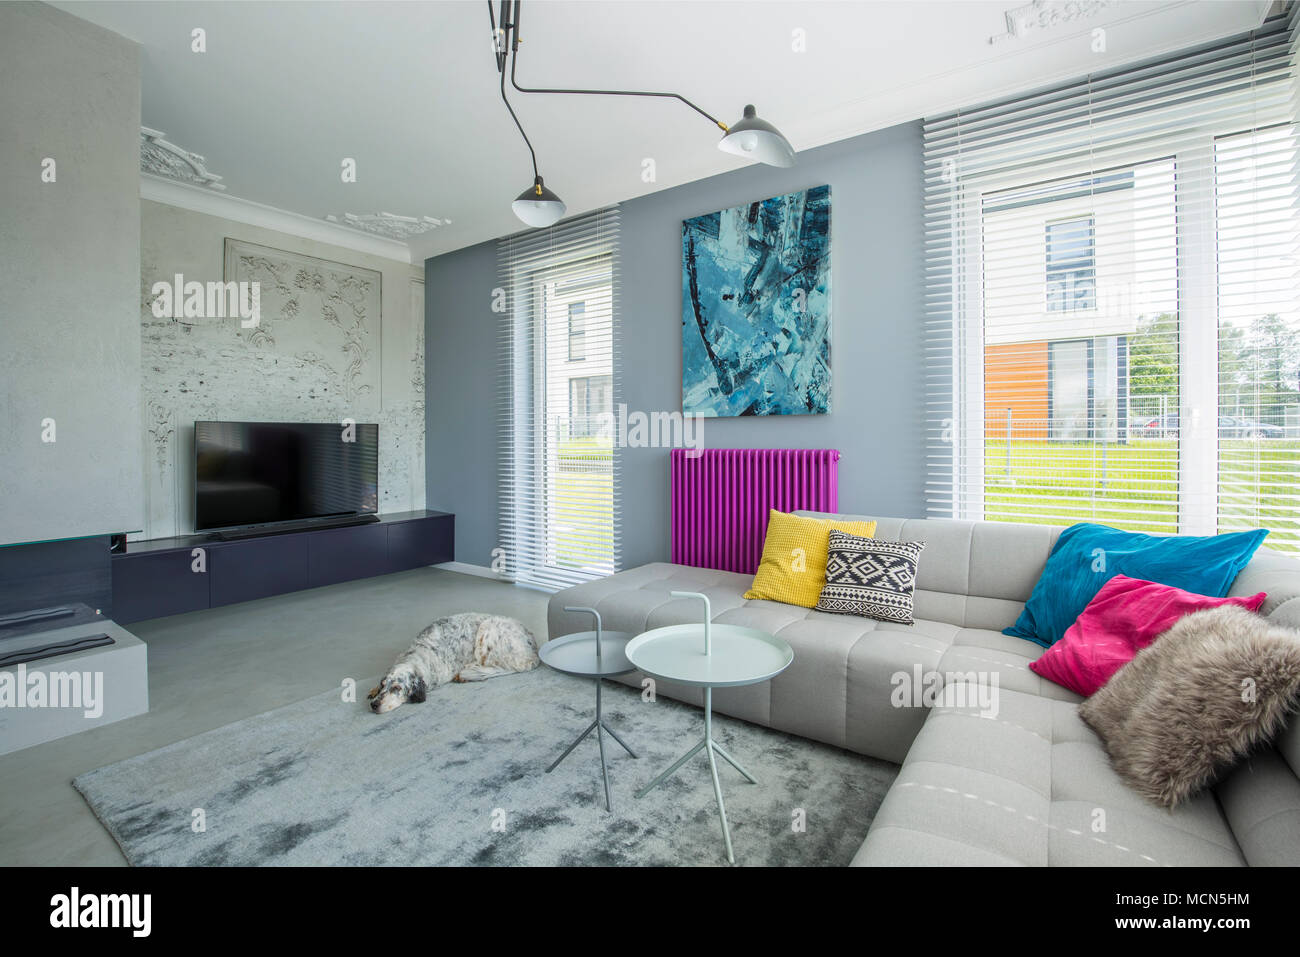 Stylish gray, spacious movie room interior with large sofa, tv, bio fireplace, sleeping dog and creative colorful decorations Stock Photo